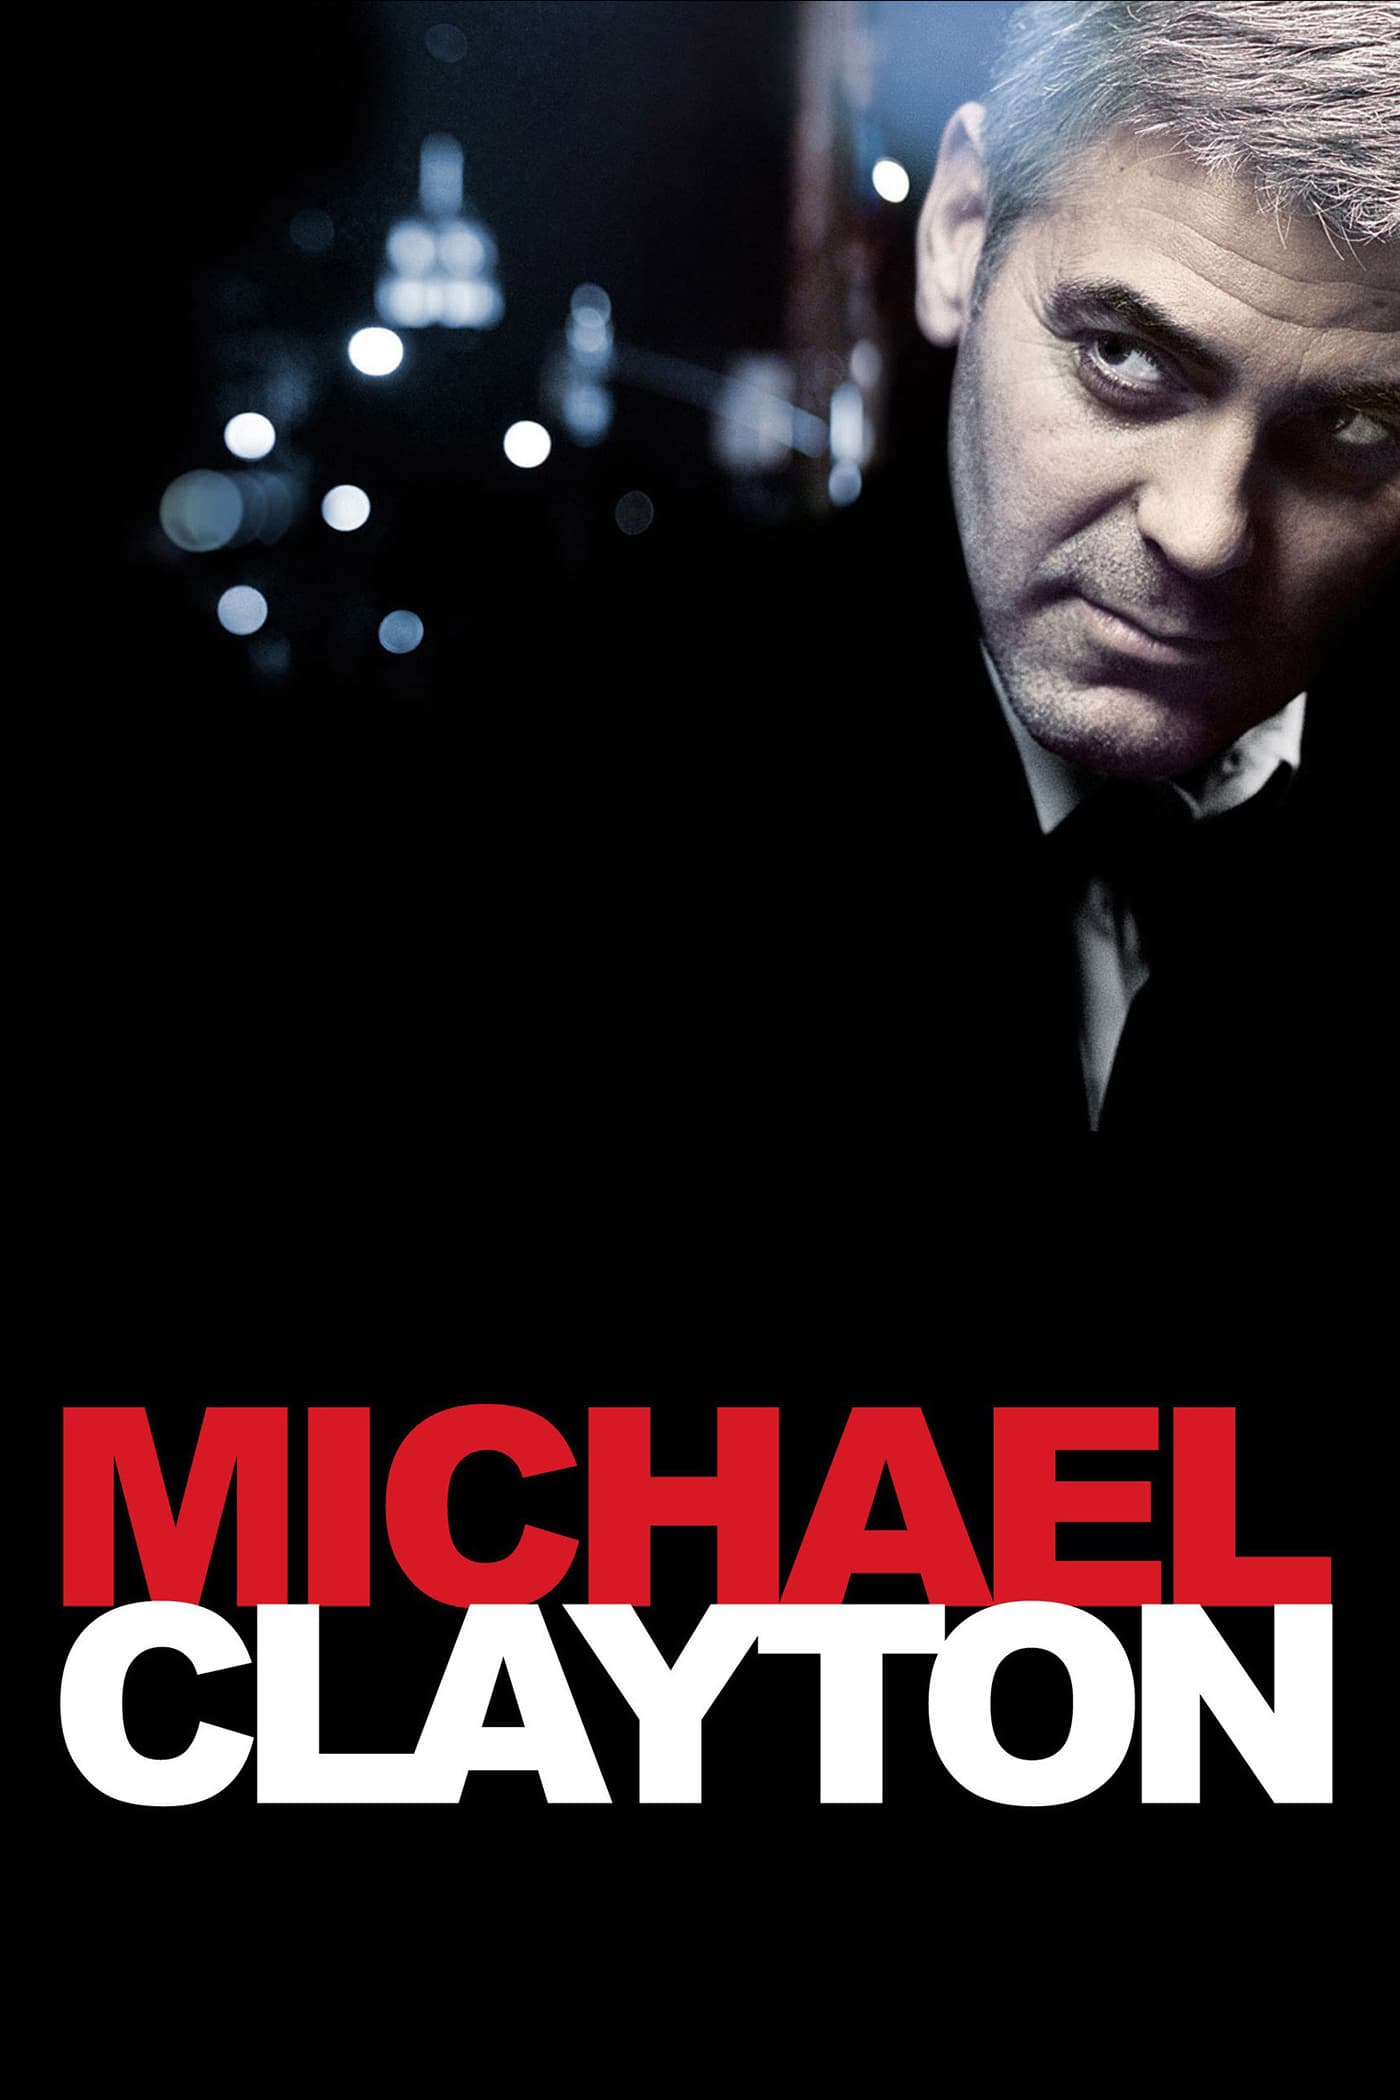 Affiche du film "Michael Clayton"